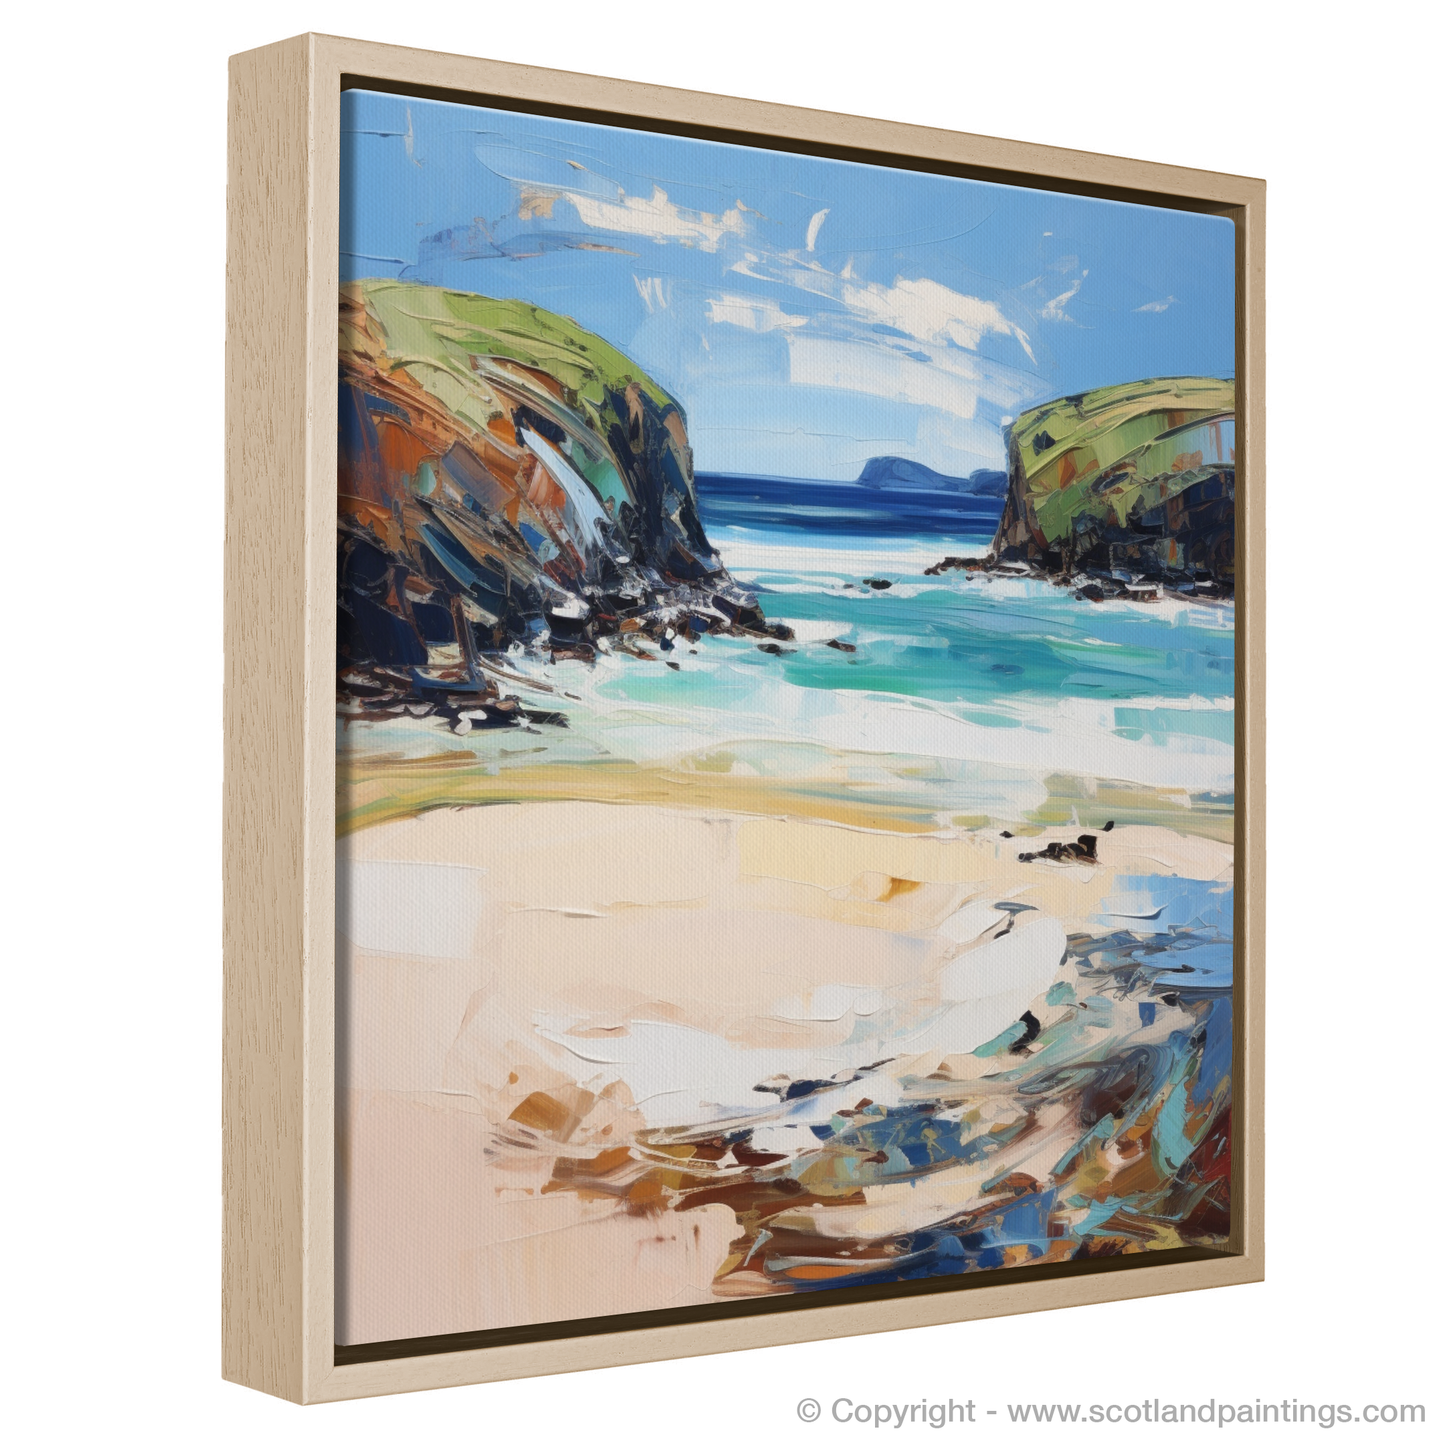 Painting and Art Print of Sandwood Bay, Sutherland entitled "Expressionist Essence of Sandwood Bay Sutherland".